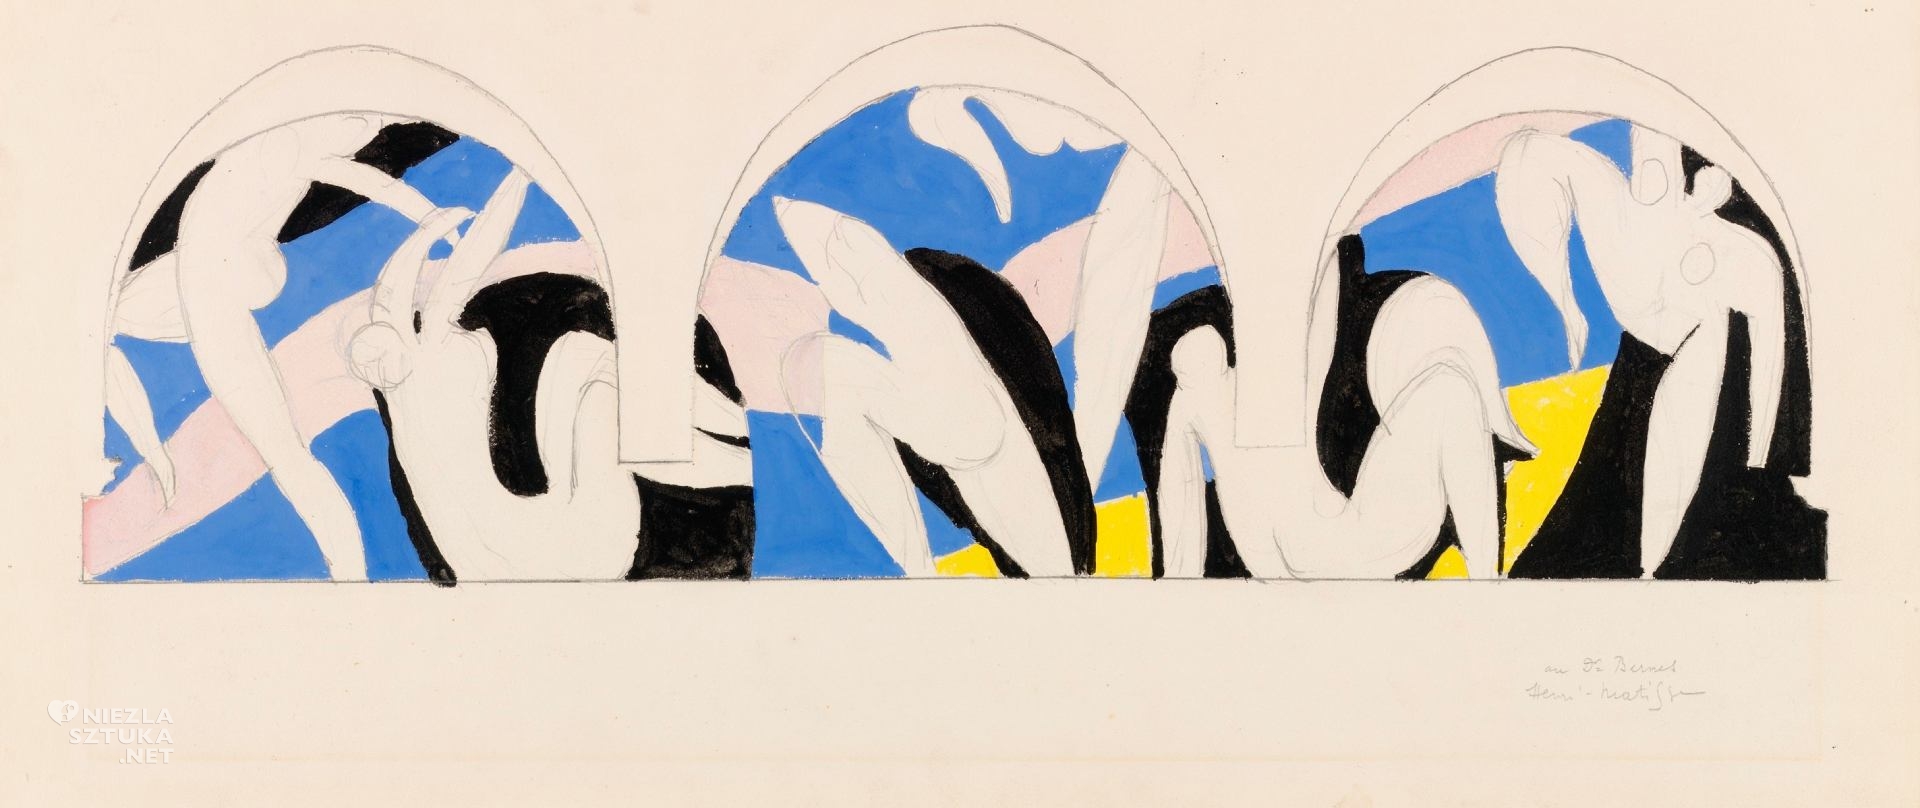 Henri Matisse, Taniec, mural, Niezła Sztuka